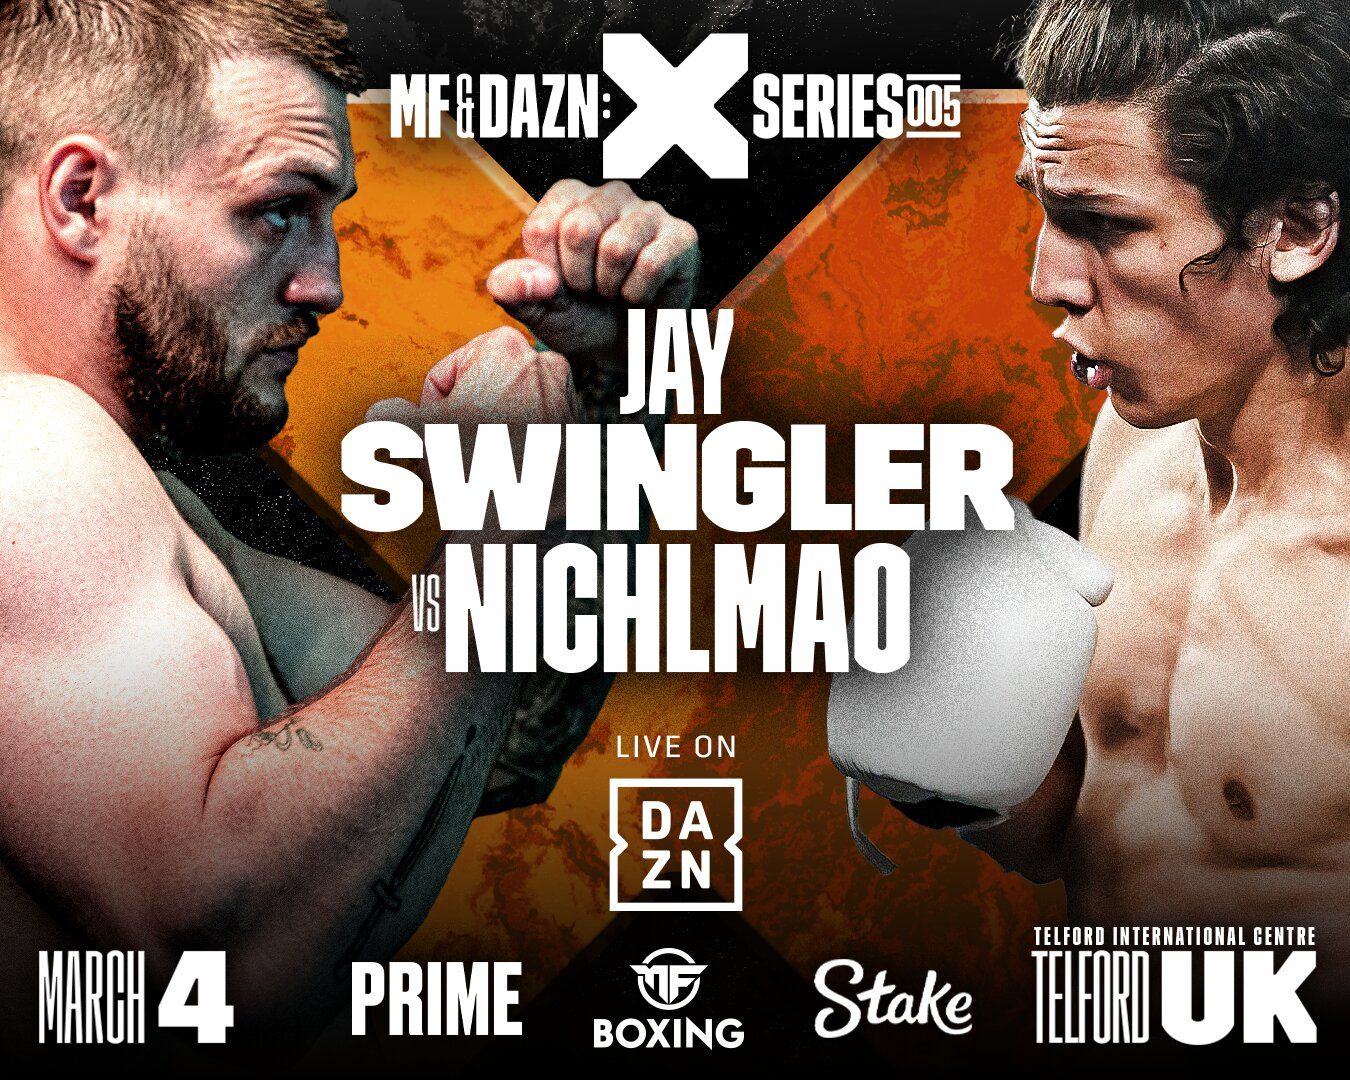 Jay Swingler vs Nichlmao Date, full card, live stream and more